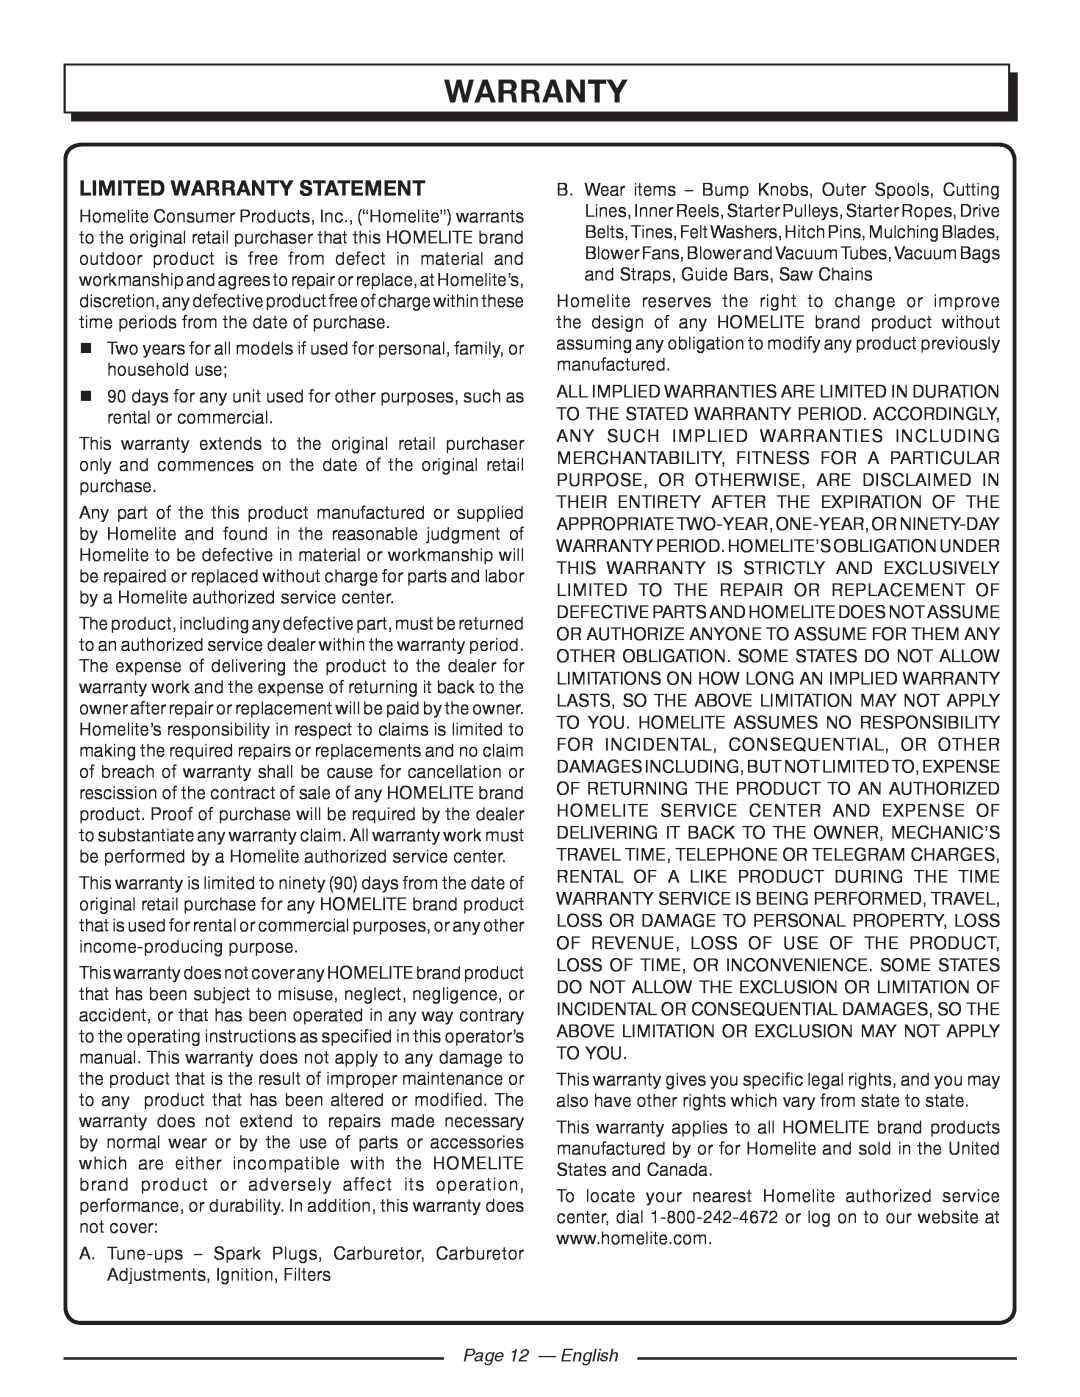 Homelite UT32650, UT32600 manuel dutilisation Limited Warranty Statement, Page 12 - English 